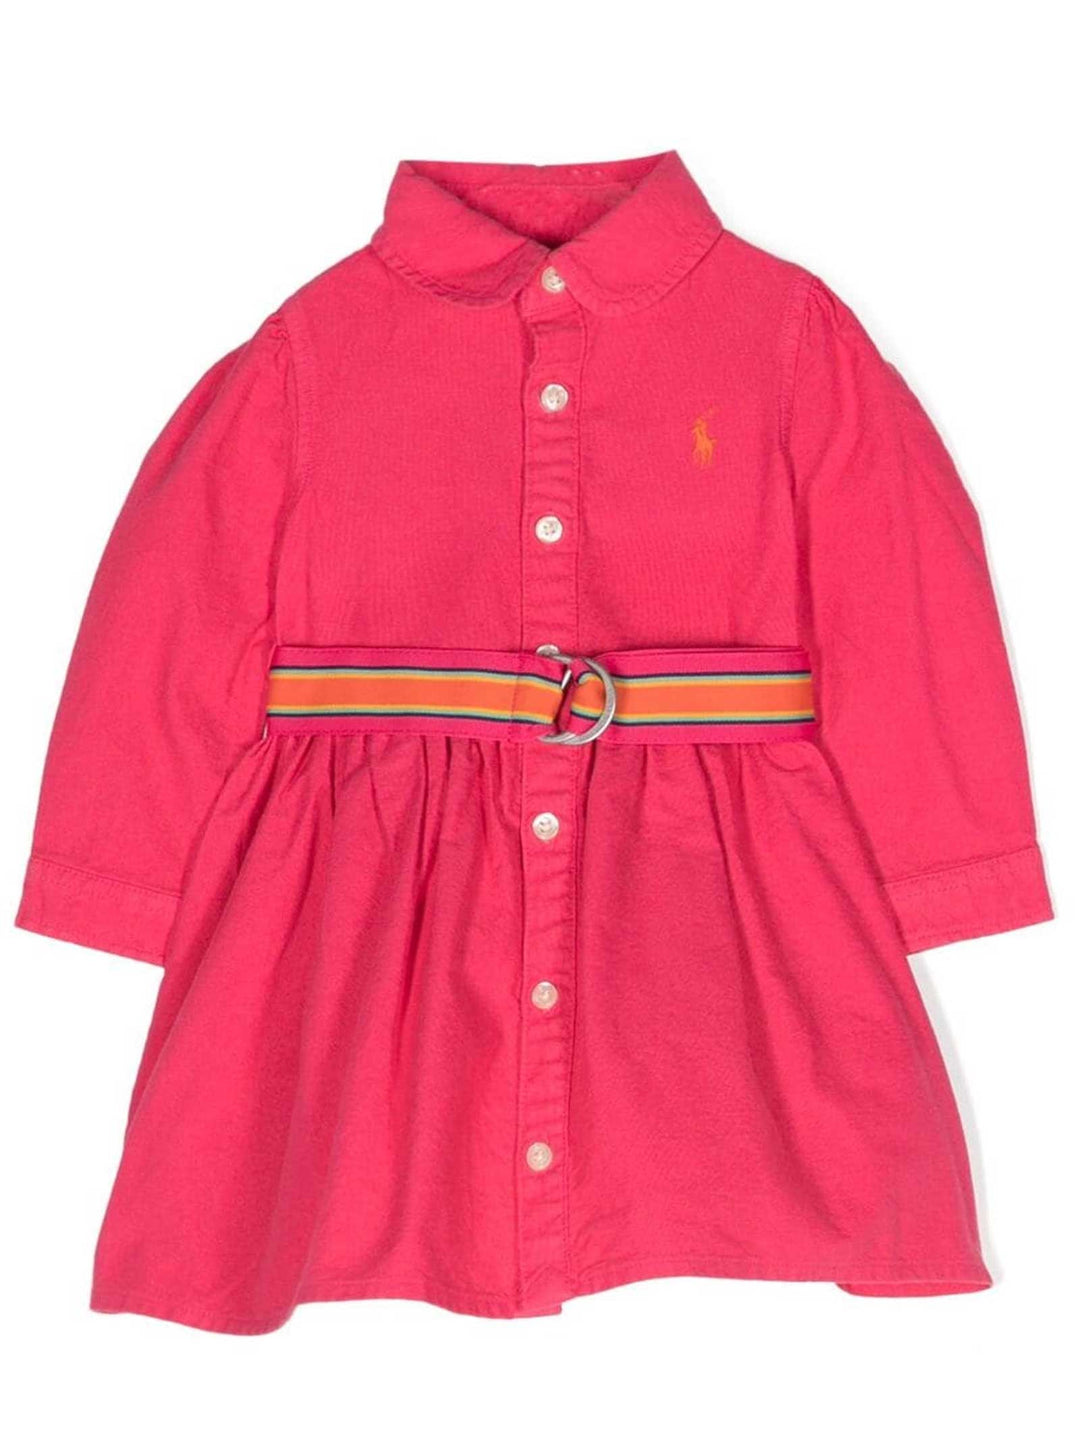 Robe bébé fille rose avec logo brodé